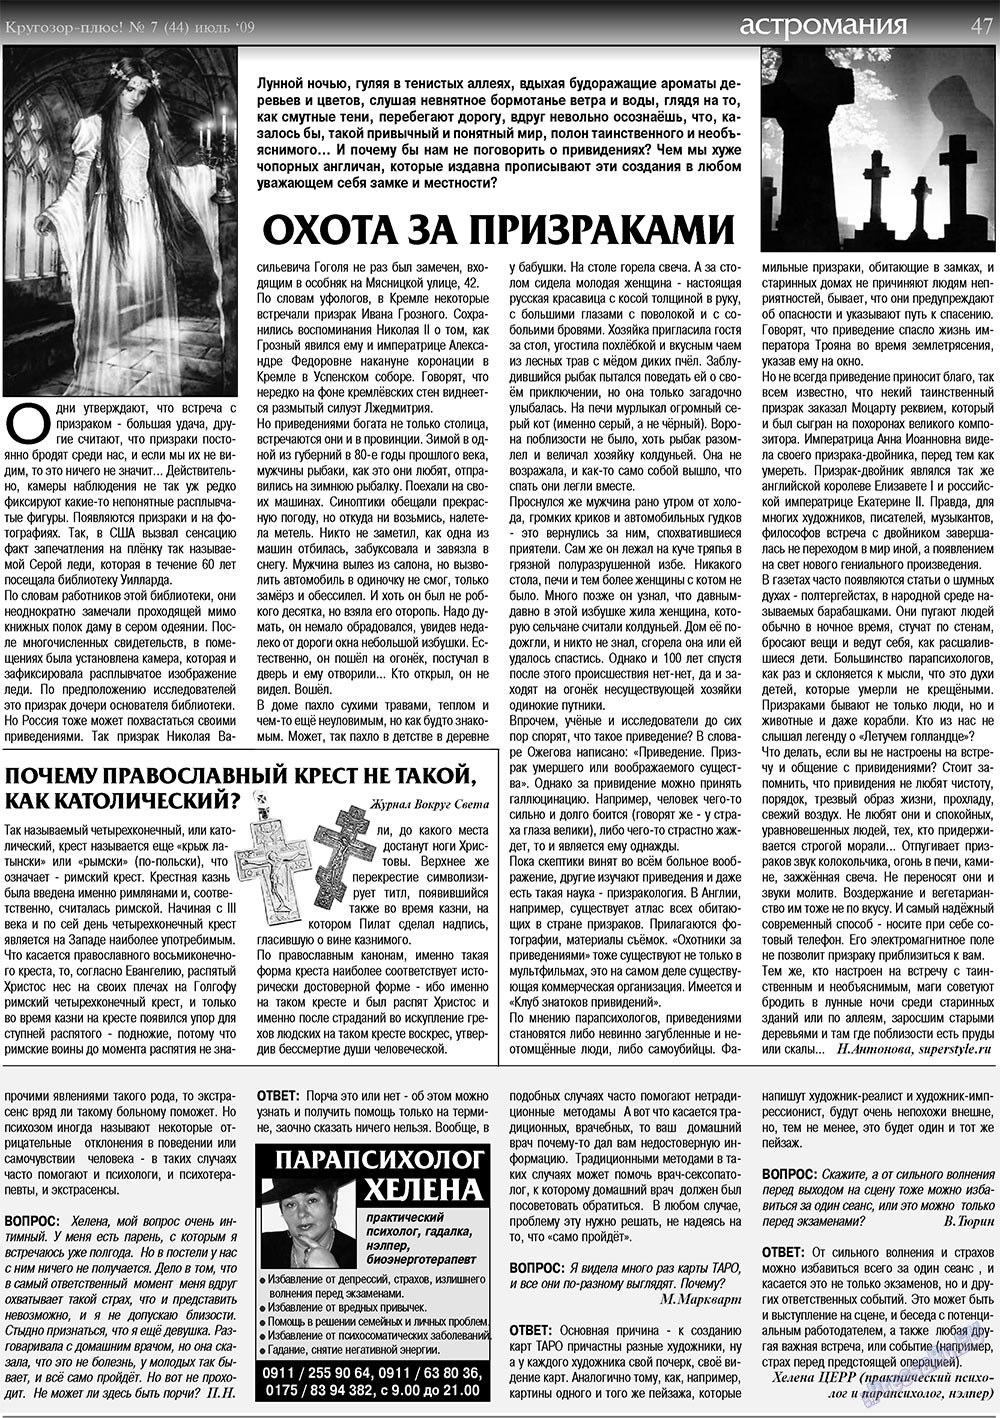 Кругозор плюс! (газета). 2009 год, номер 7, стр. 47